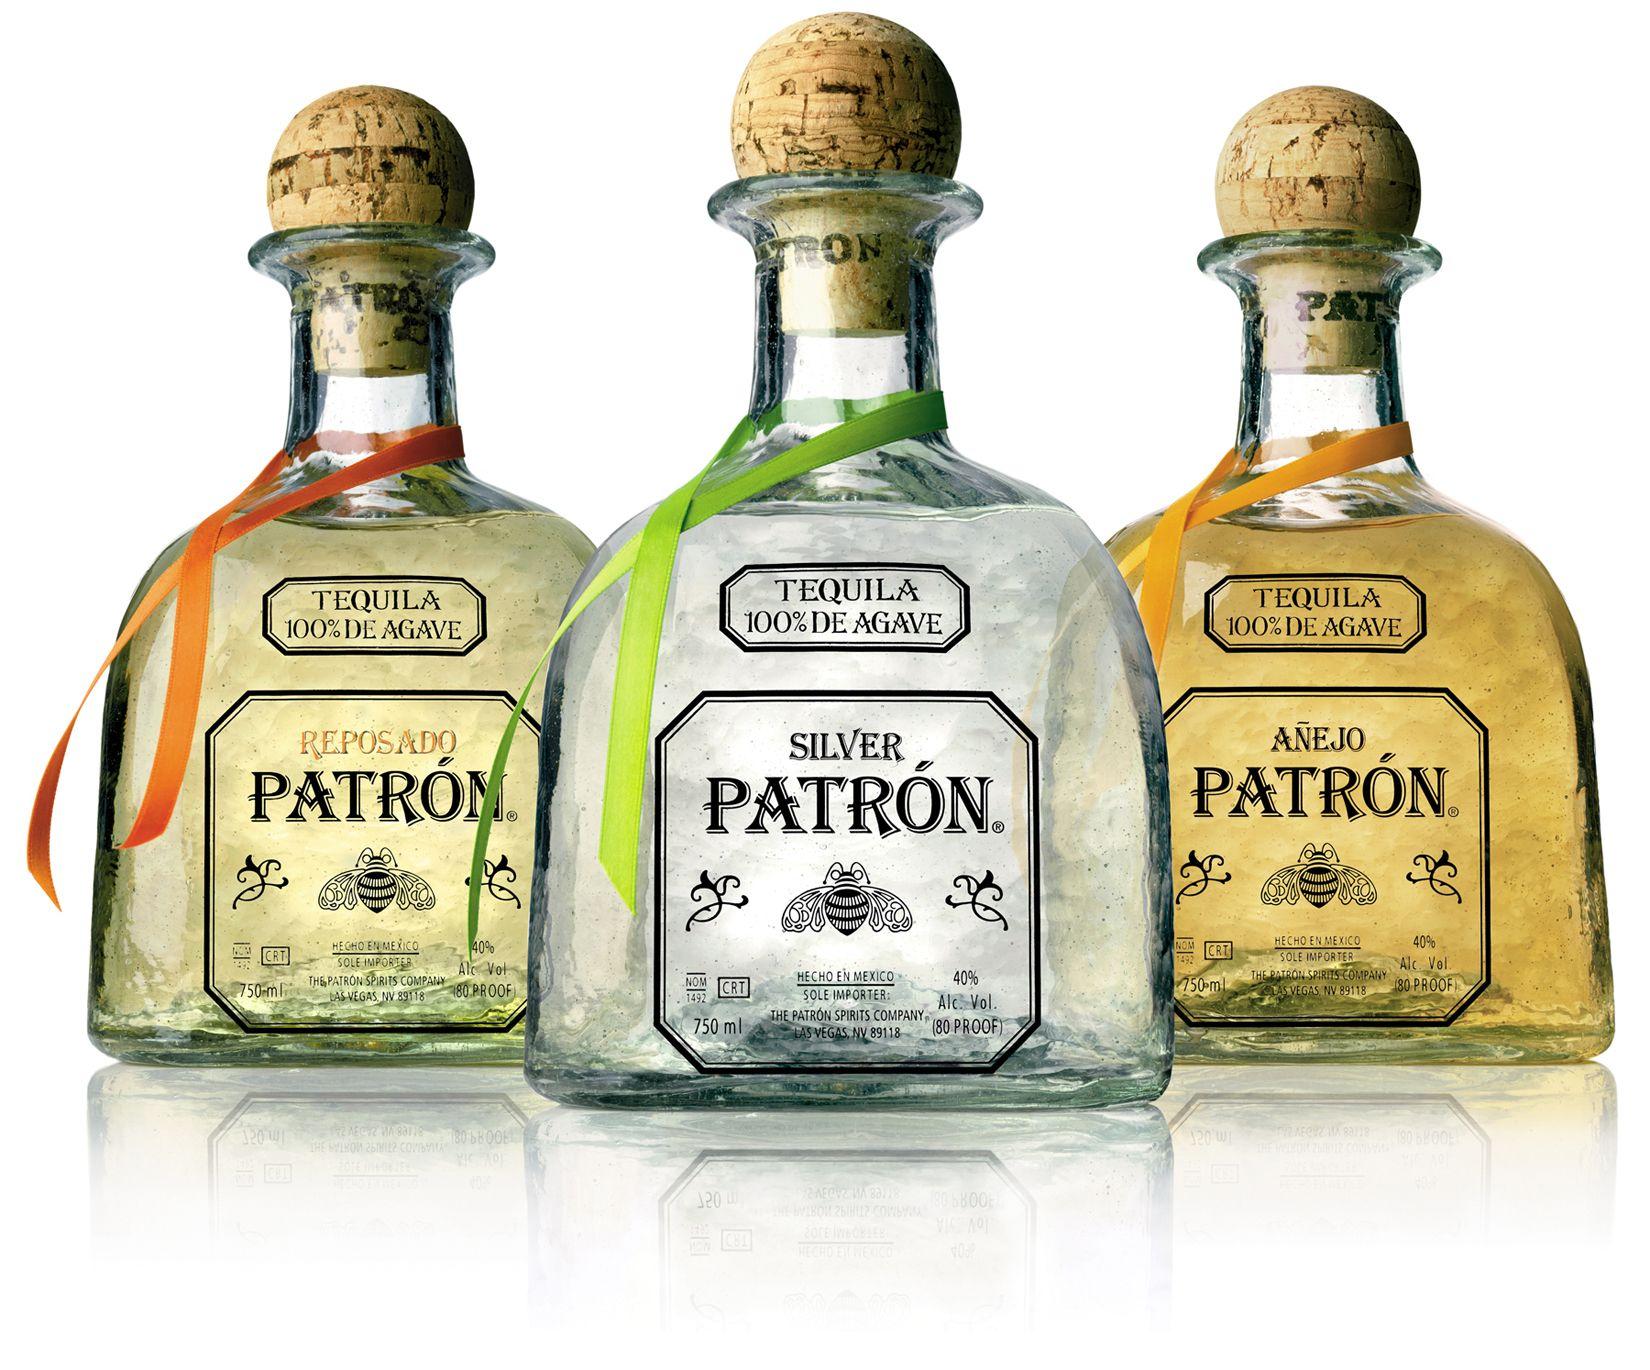 Patron Logo - Patrón logo and bottles - Fonts In Use